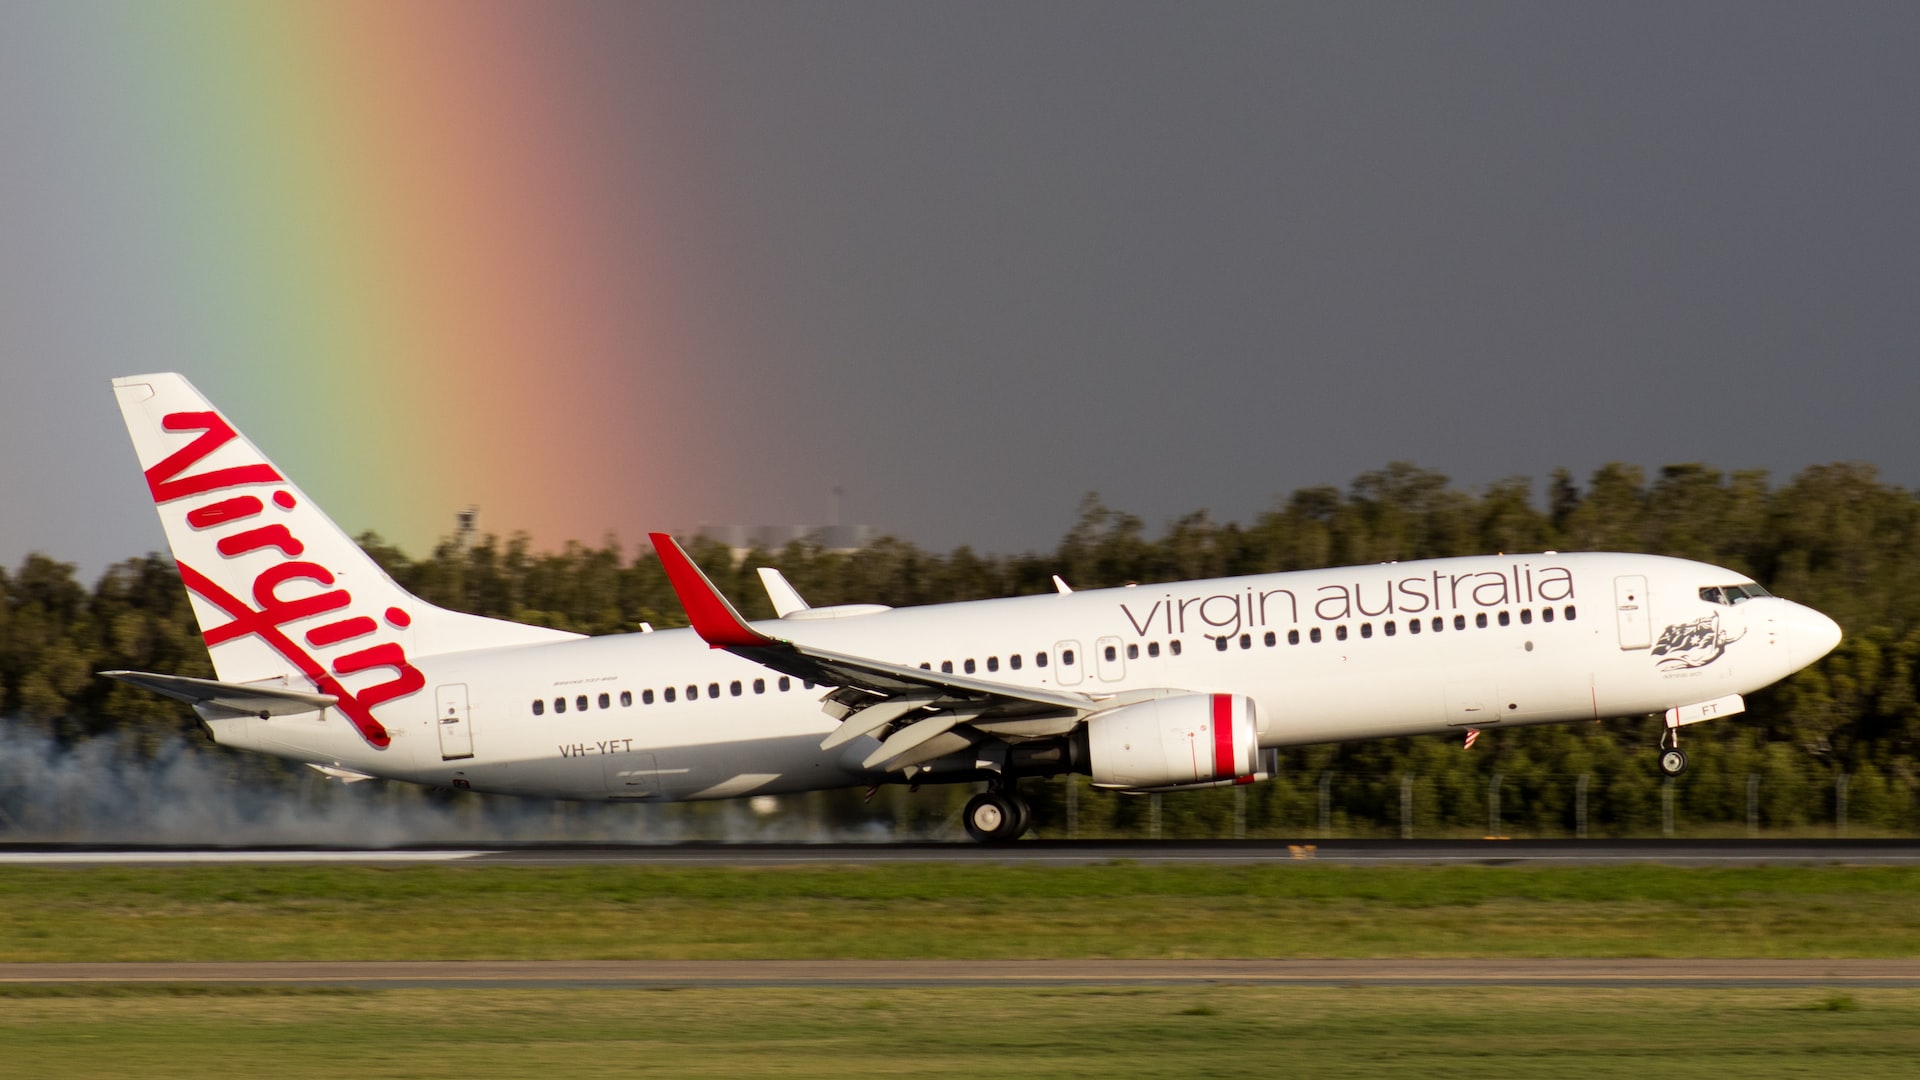 A Virgin Australia airlines plane landing on a runway.